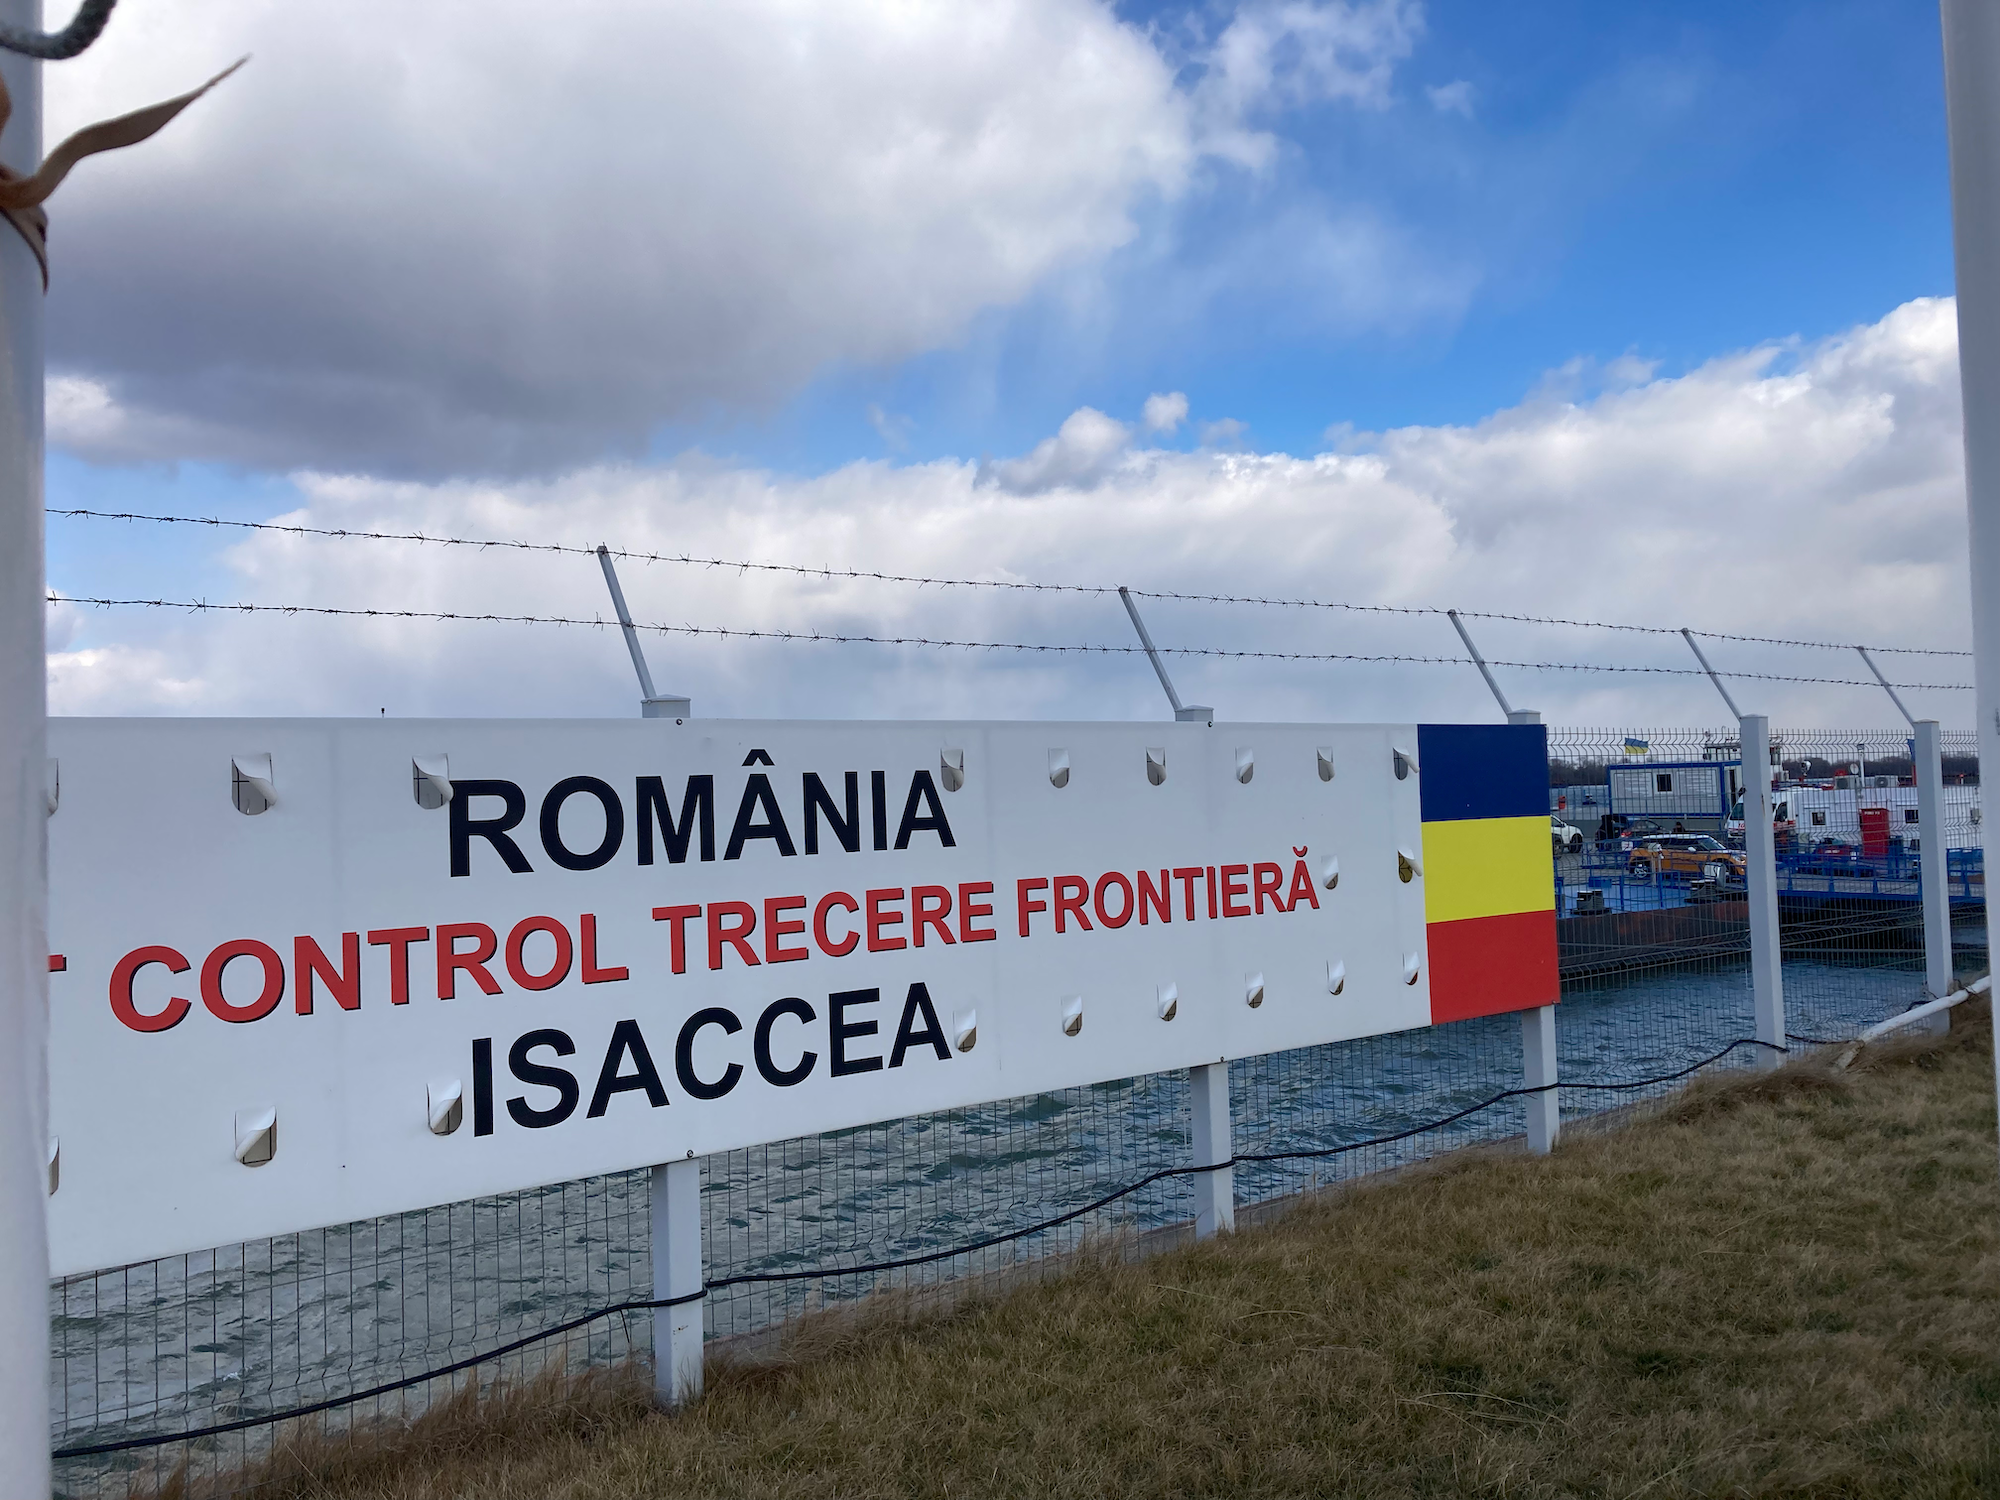 Isaccea border crossing